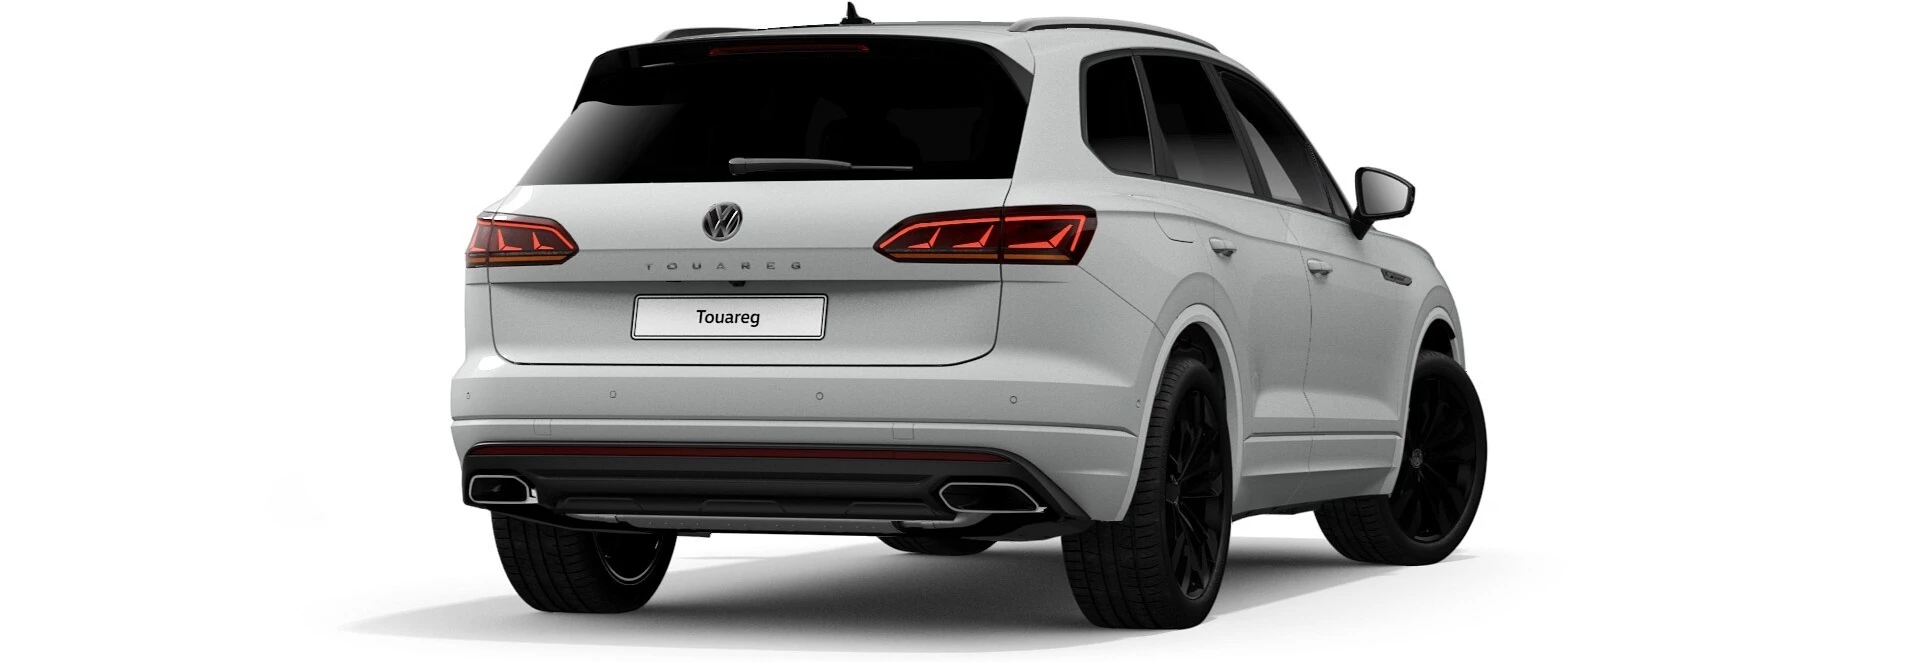 Volkswagen Touareg SUV range expanded for 2020 